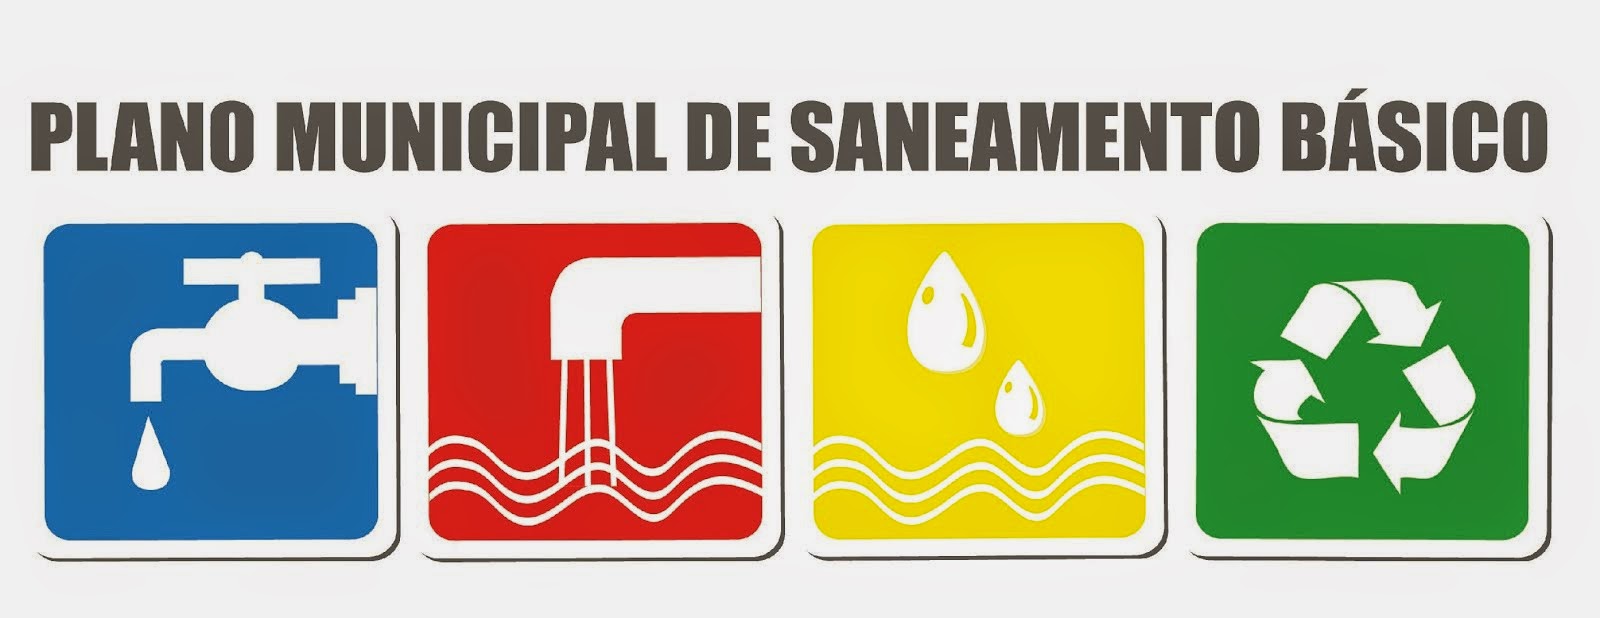 Plano Municipal de Saneamento Básico de Macapá